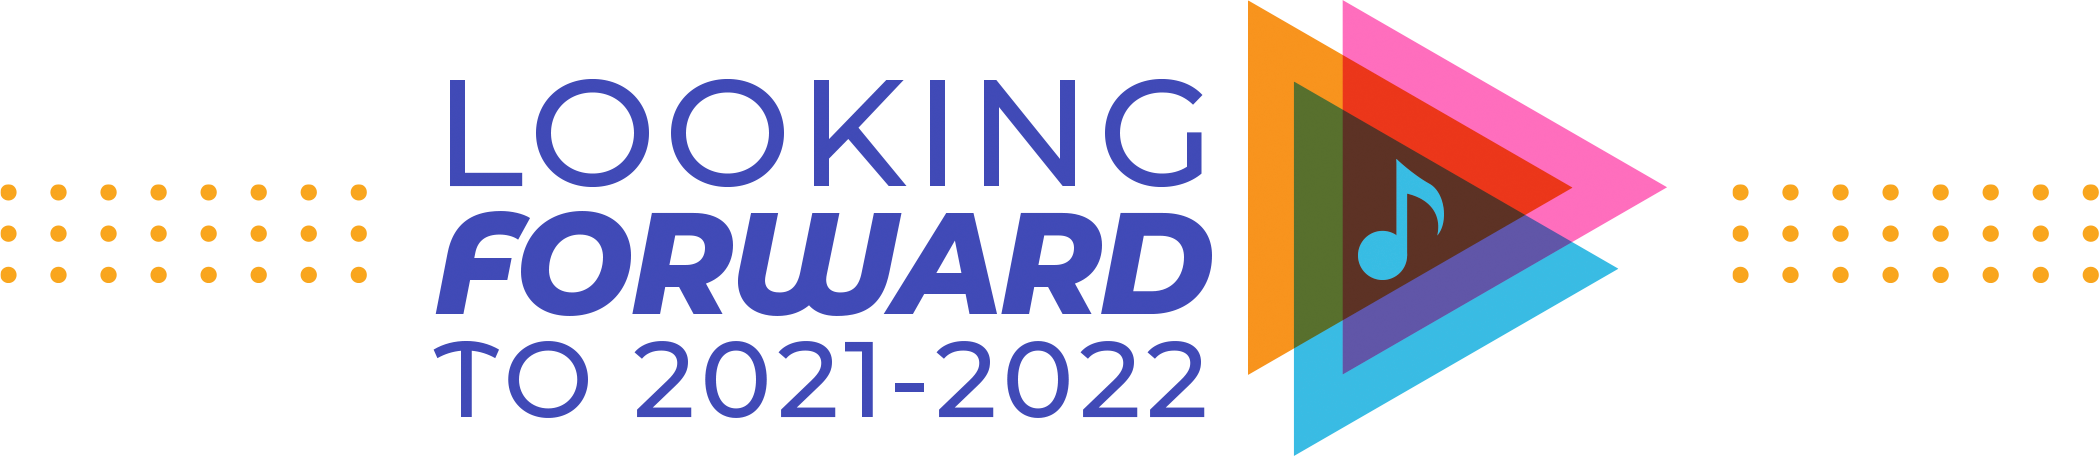 Looking FORWARD to 2021-2022 - Hal Leonard's Virtual Music Education Summit